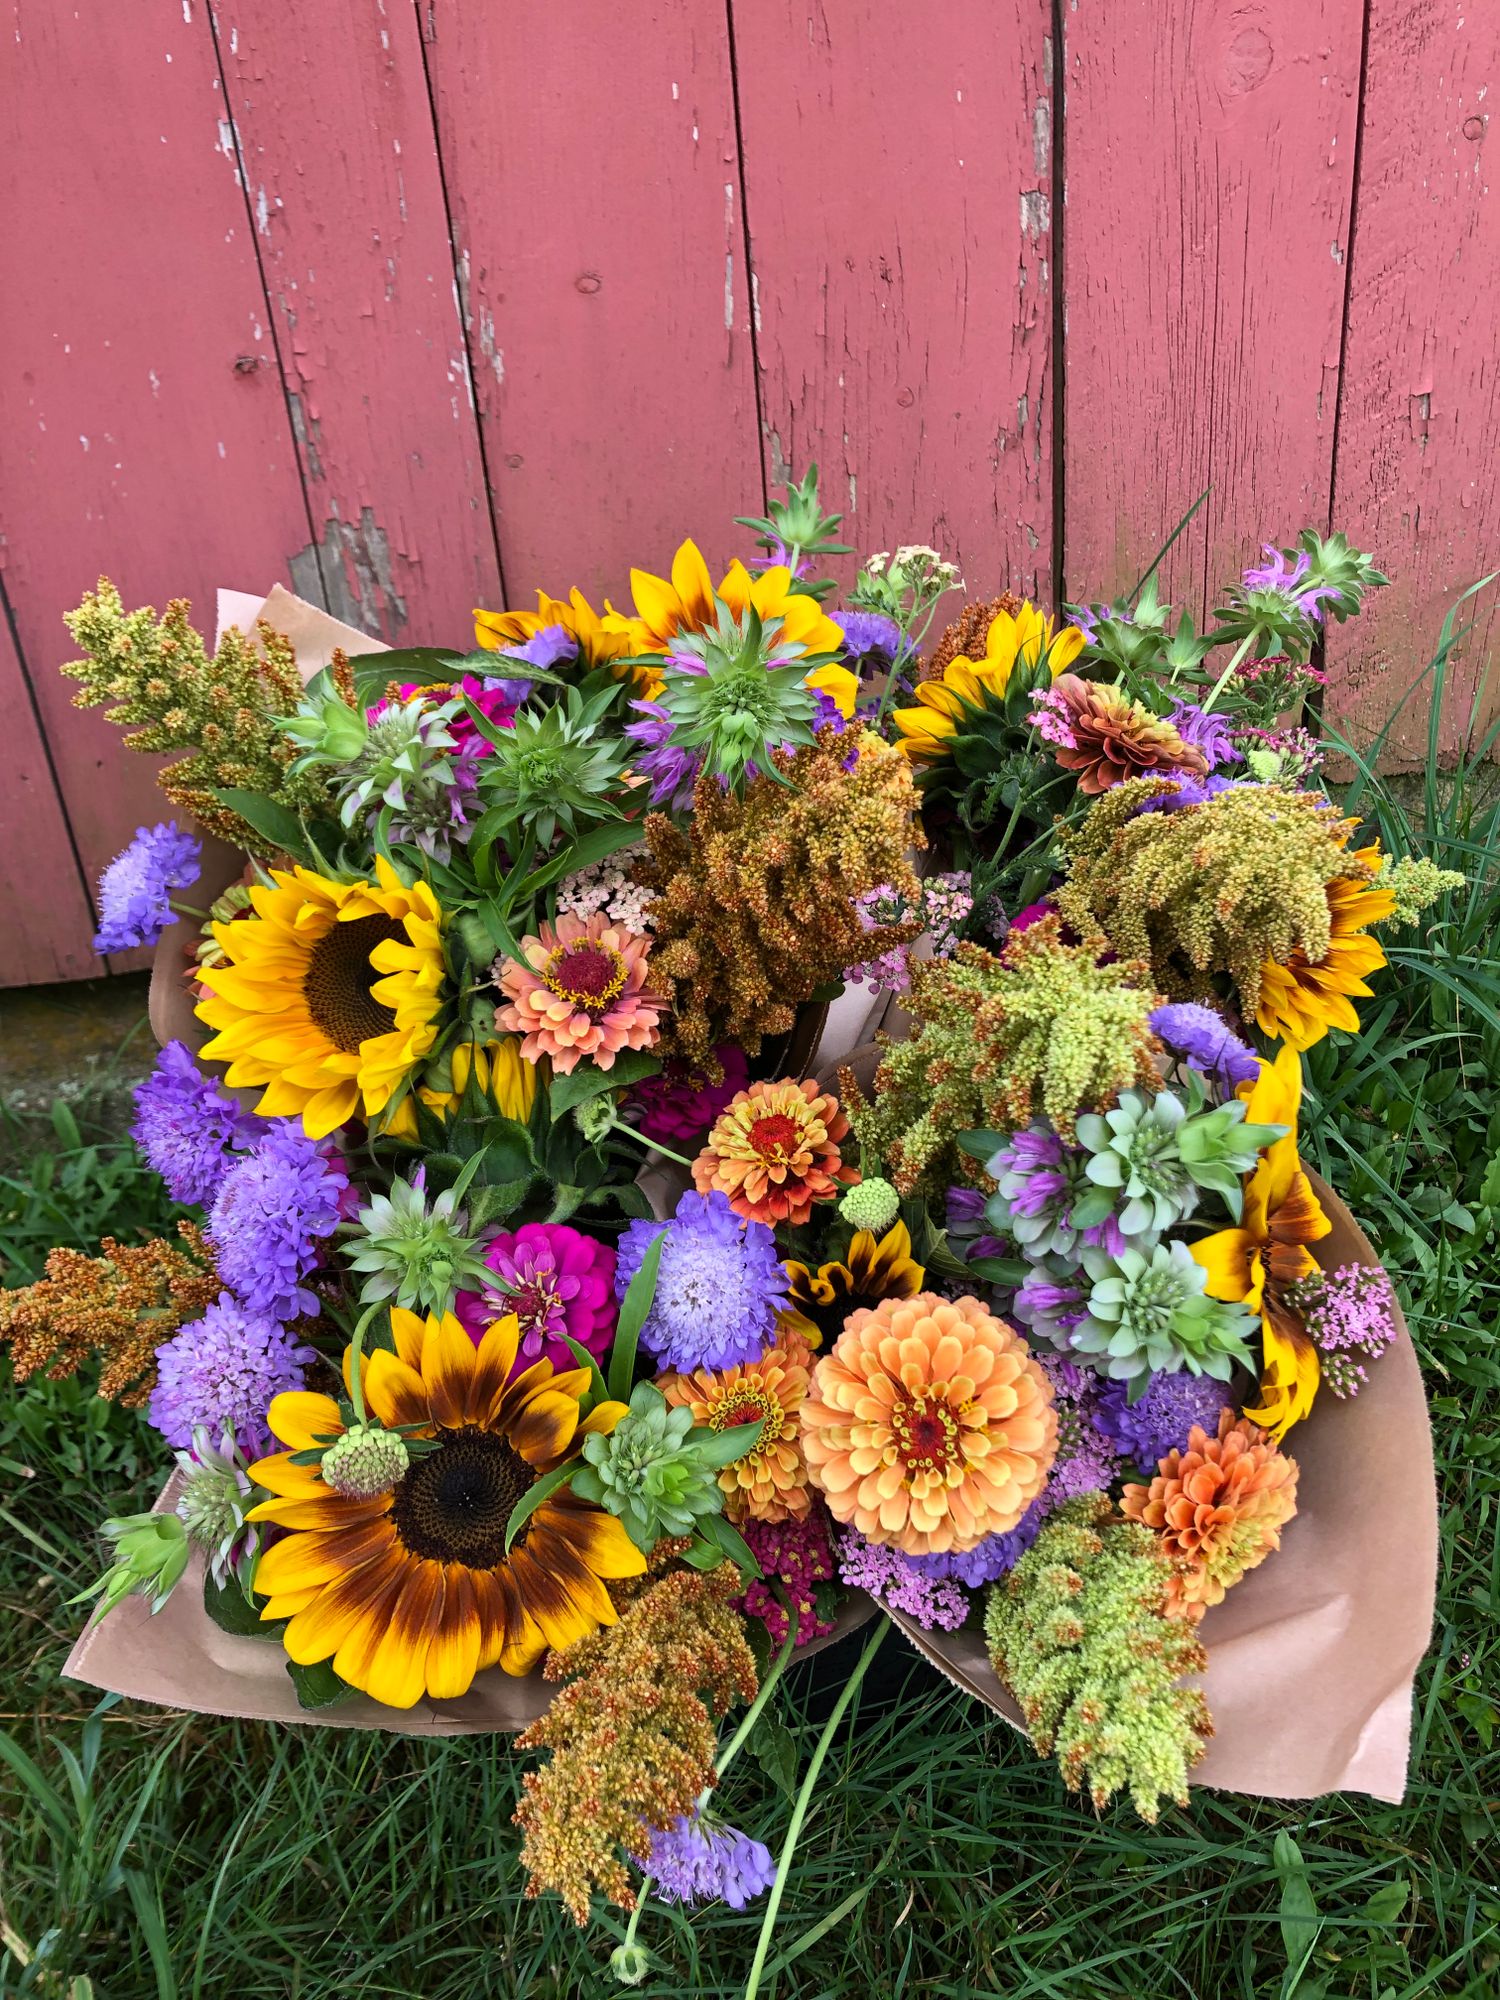 Farmer's Bunch - Market Bouquet   